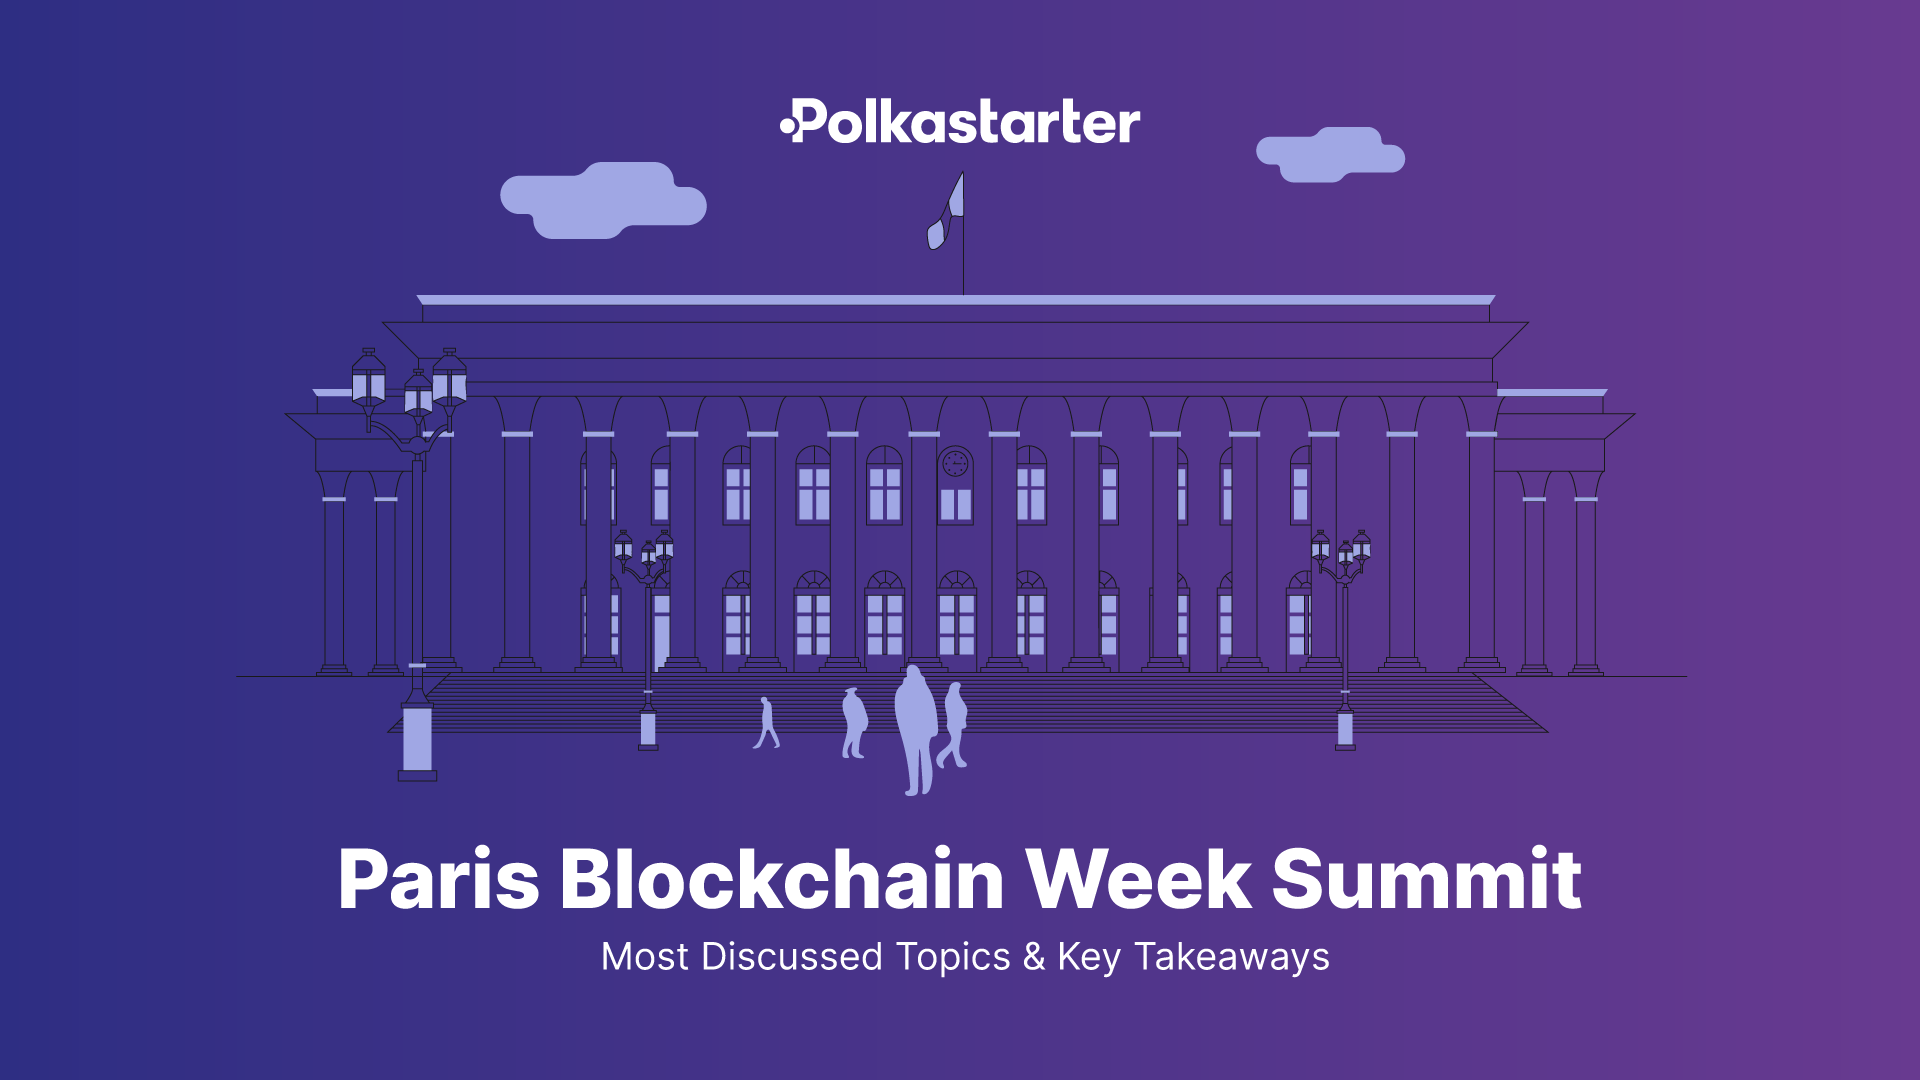 Paris Blockchain Week Summit: Most Discussed Topics & Key Takeaways